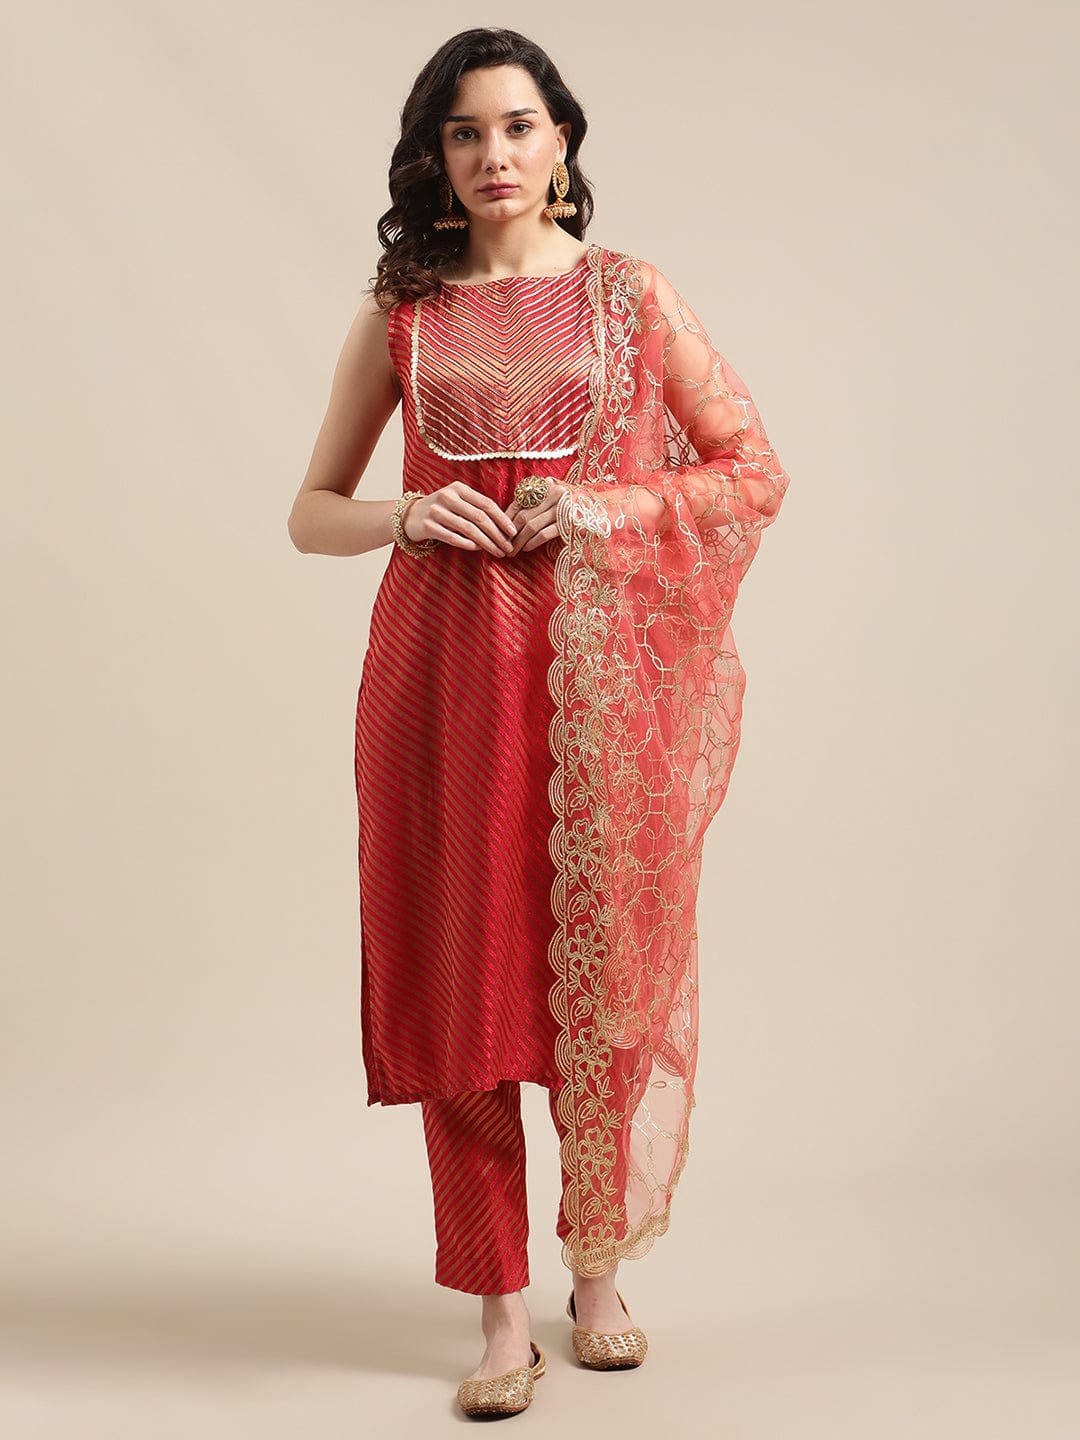 Gota Patti Chanderi Cotton Pakistani Suit in Beige : KJN4008